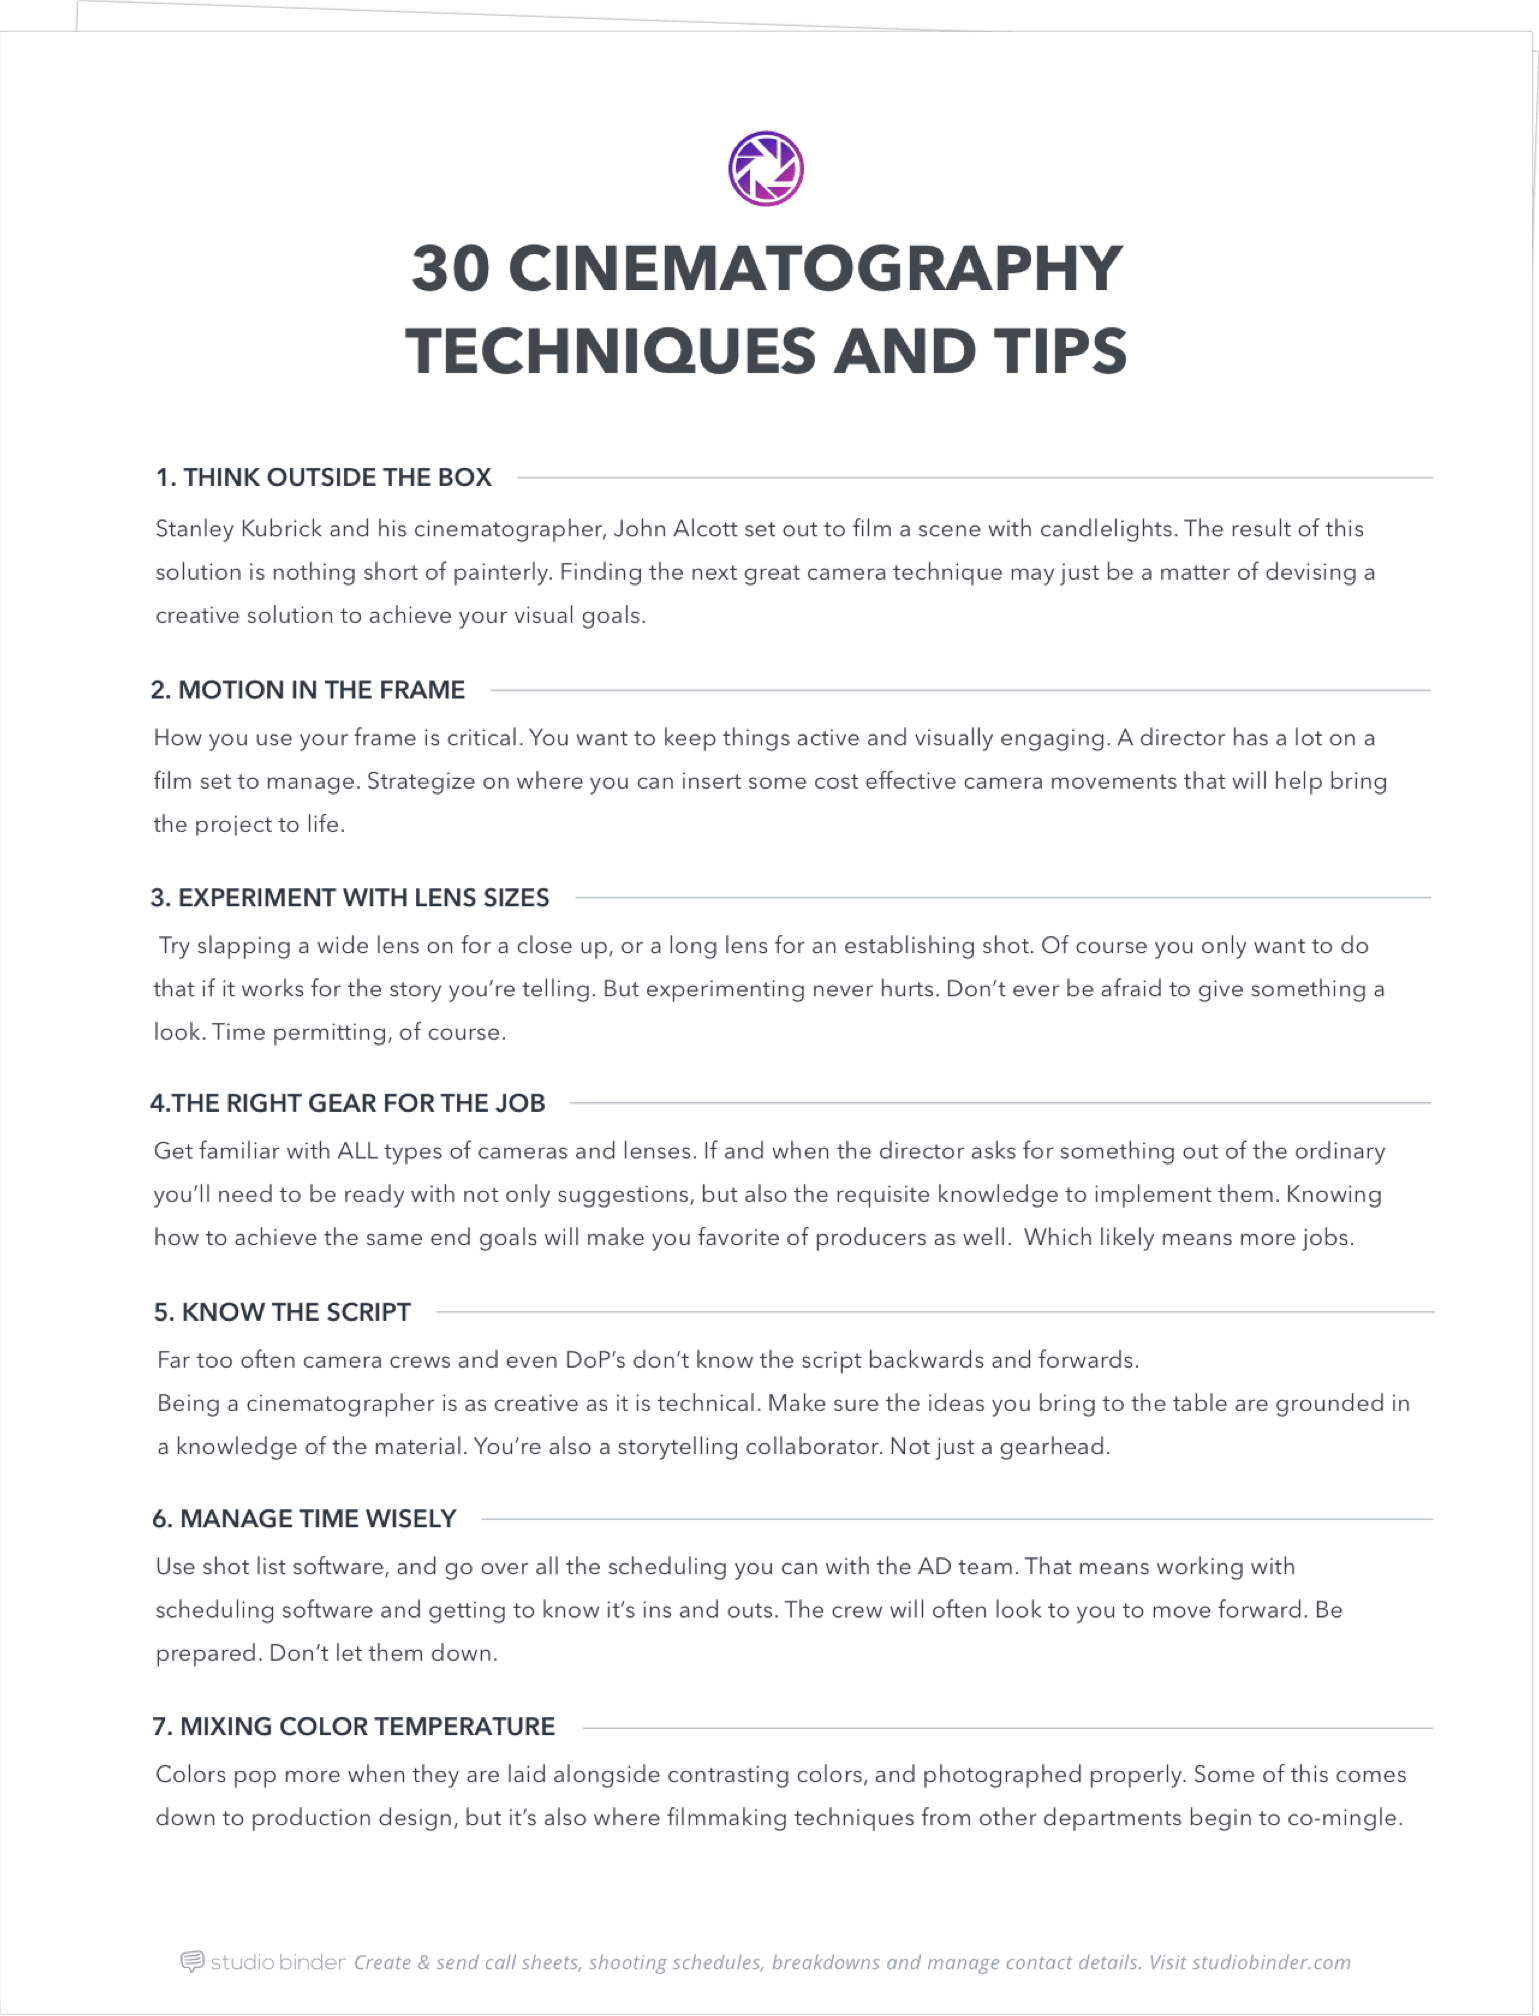 making movies by sidney lumet pdf free download